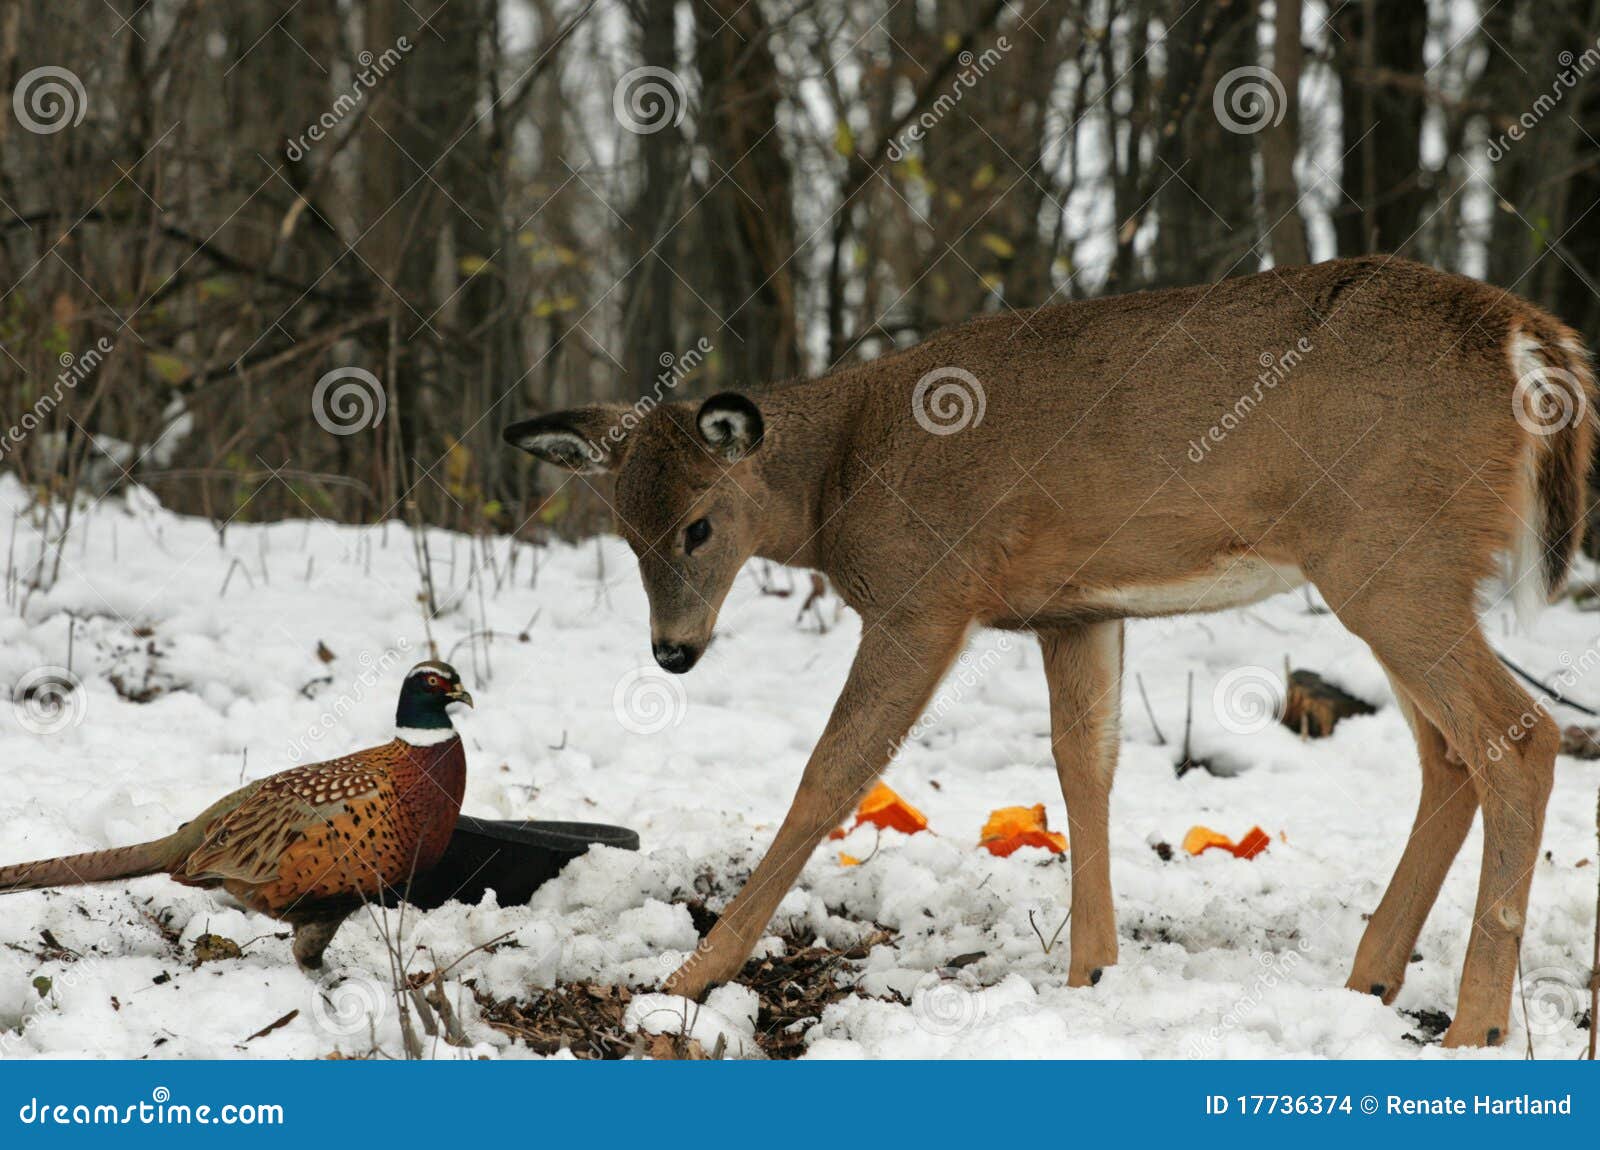 doe meets pheasant